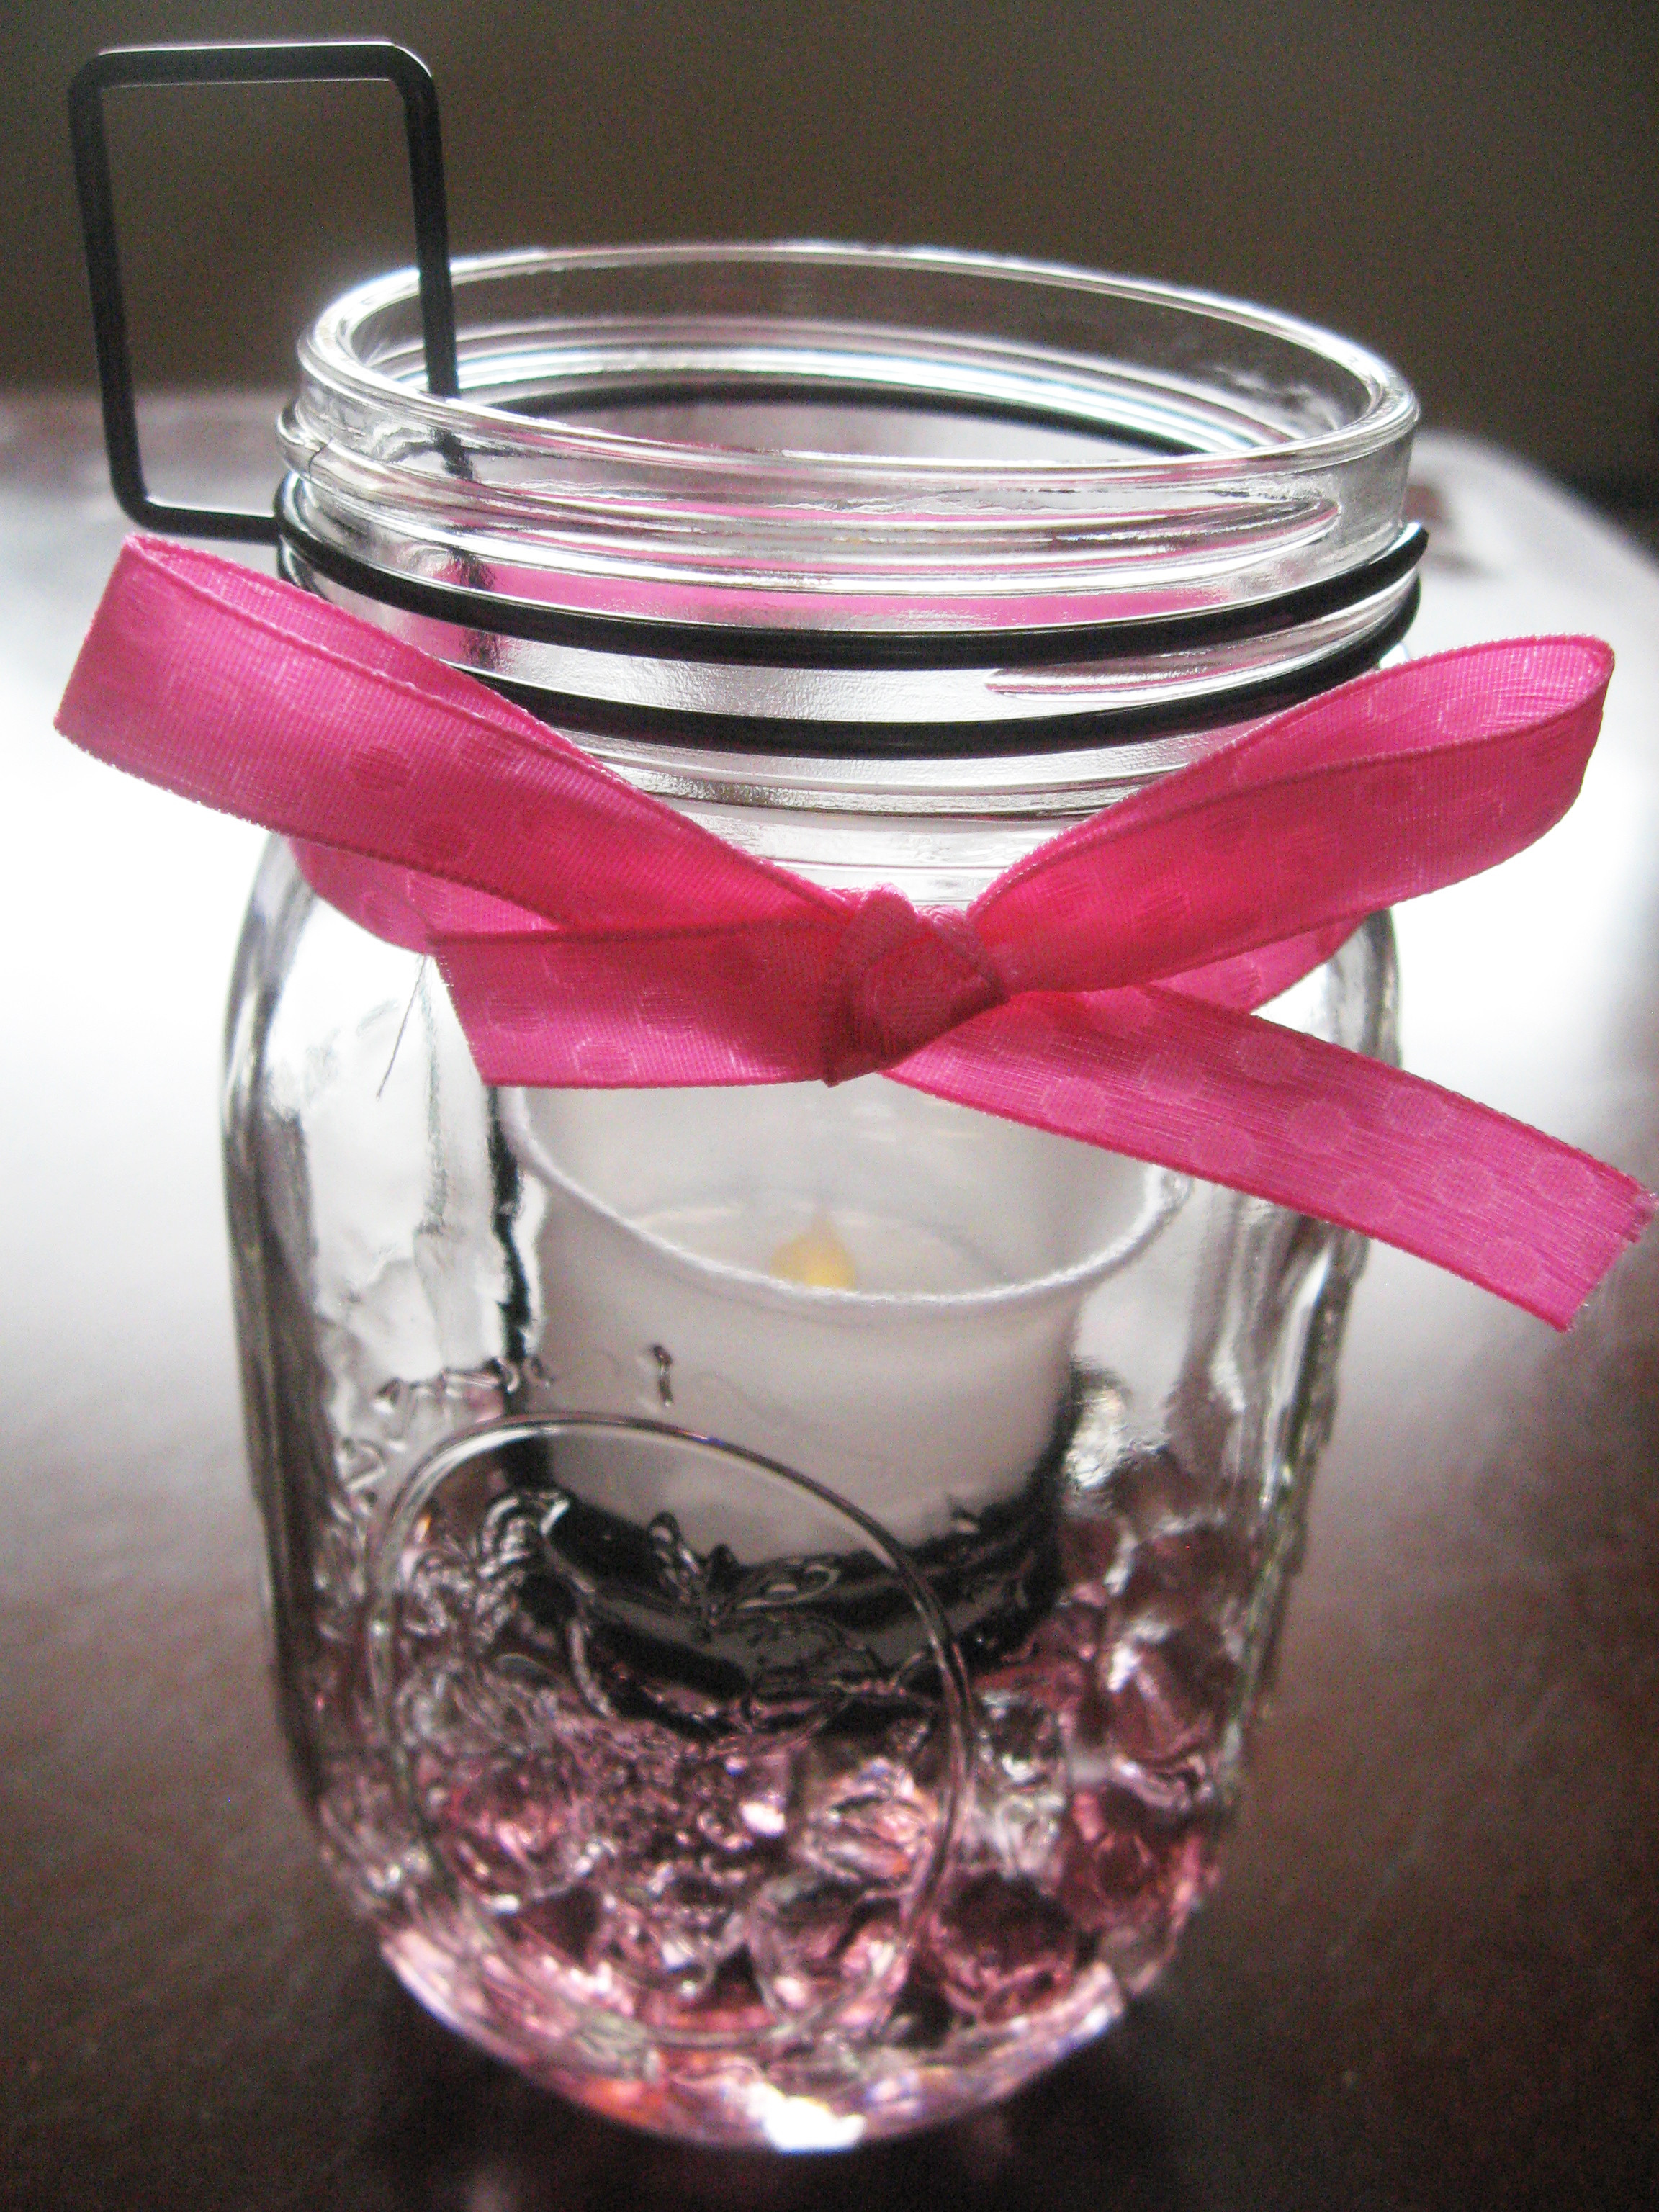 Best ideas about DIY Mason Jar Candle
. Save or Pin DIY Mason Jar LED Candle Decor Now.